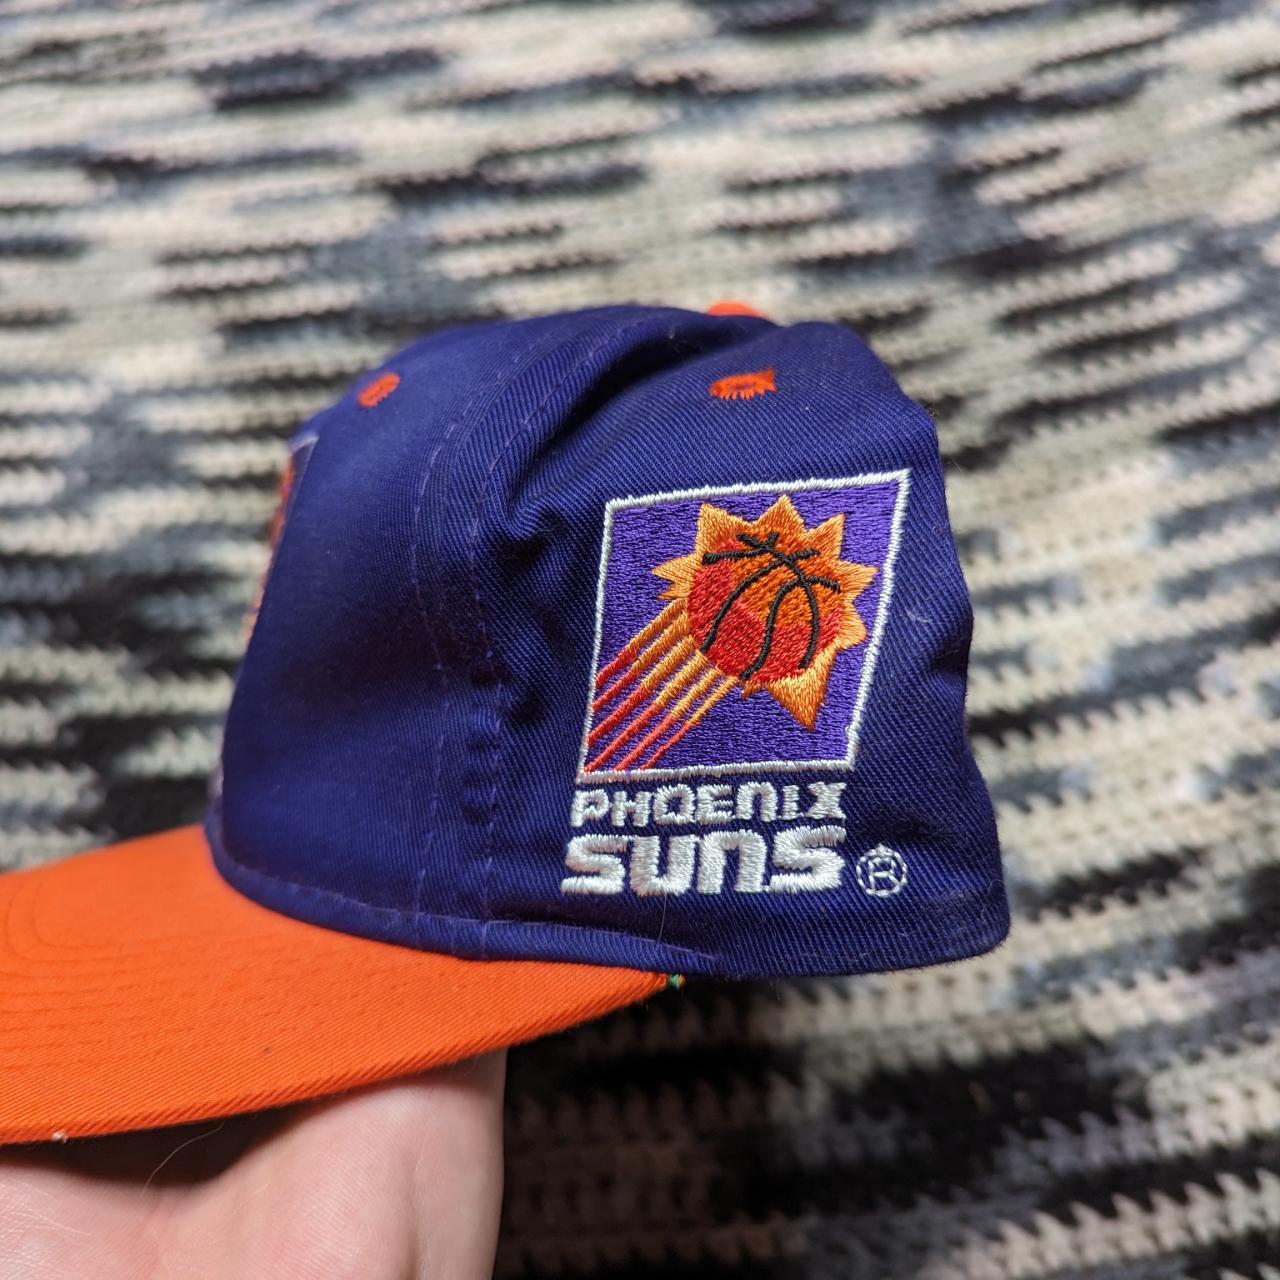 Vintage 90s Phoenix Suns NBA snap back hat In good - Depop